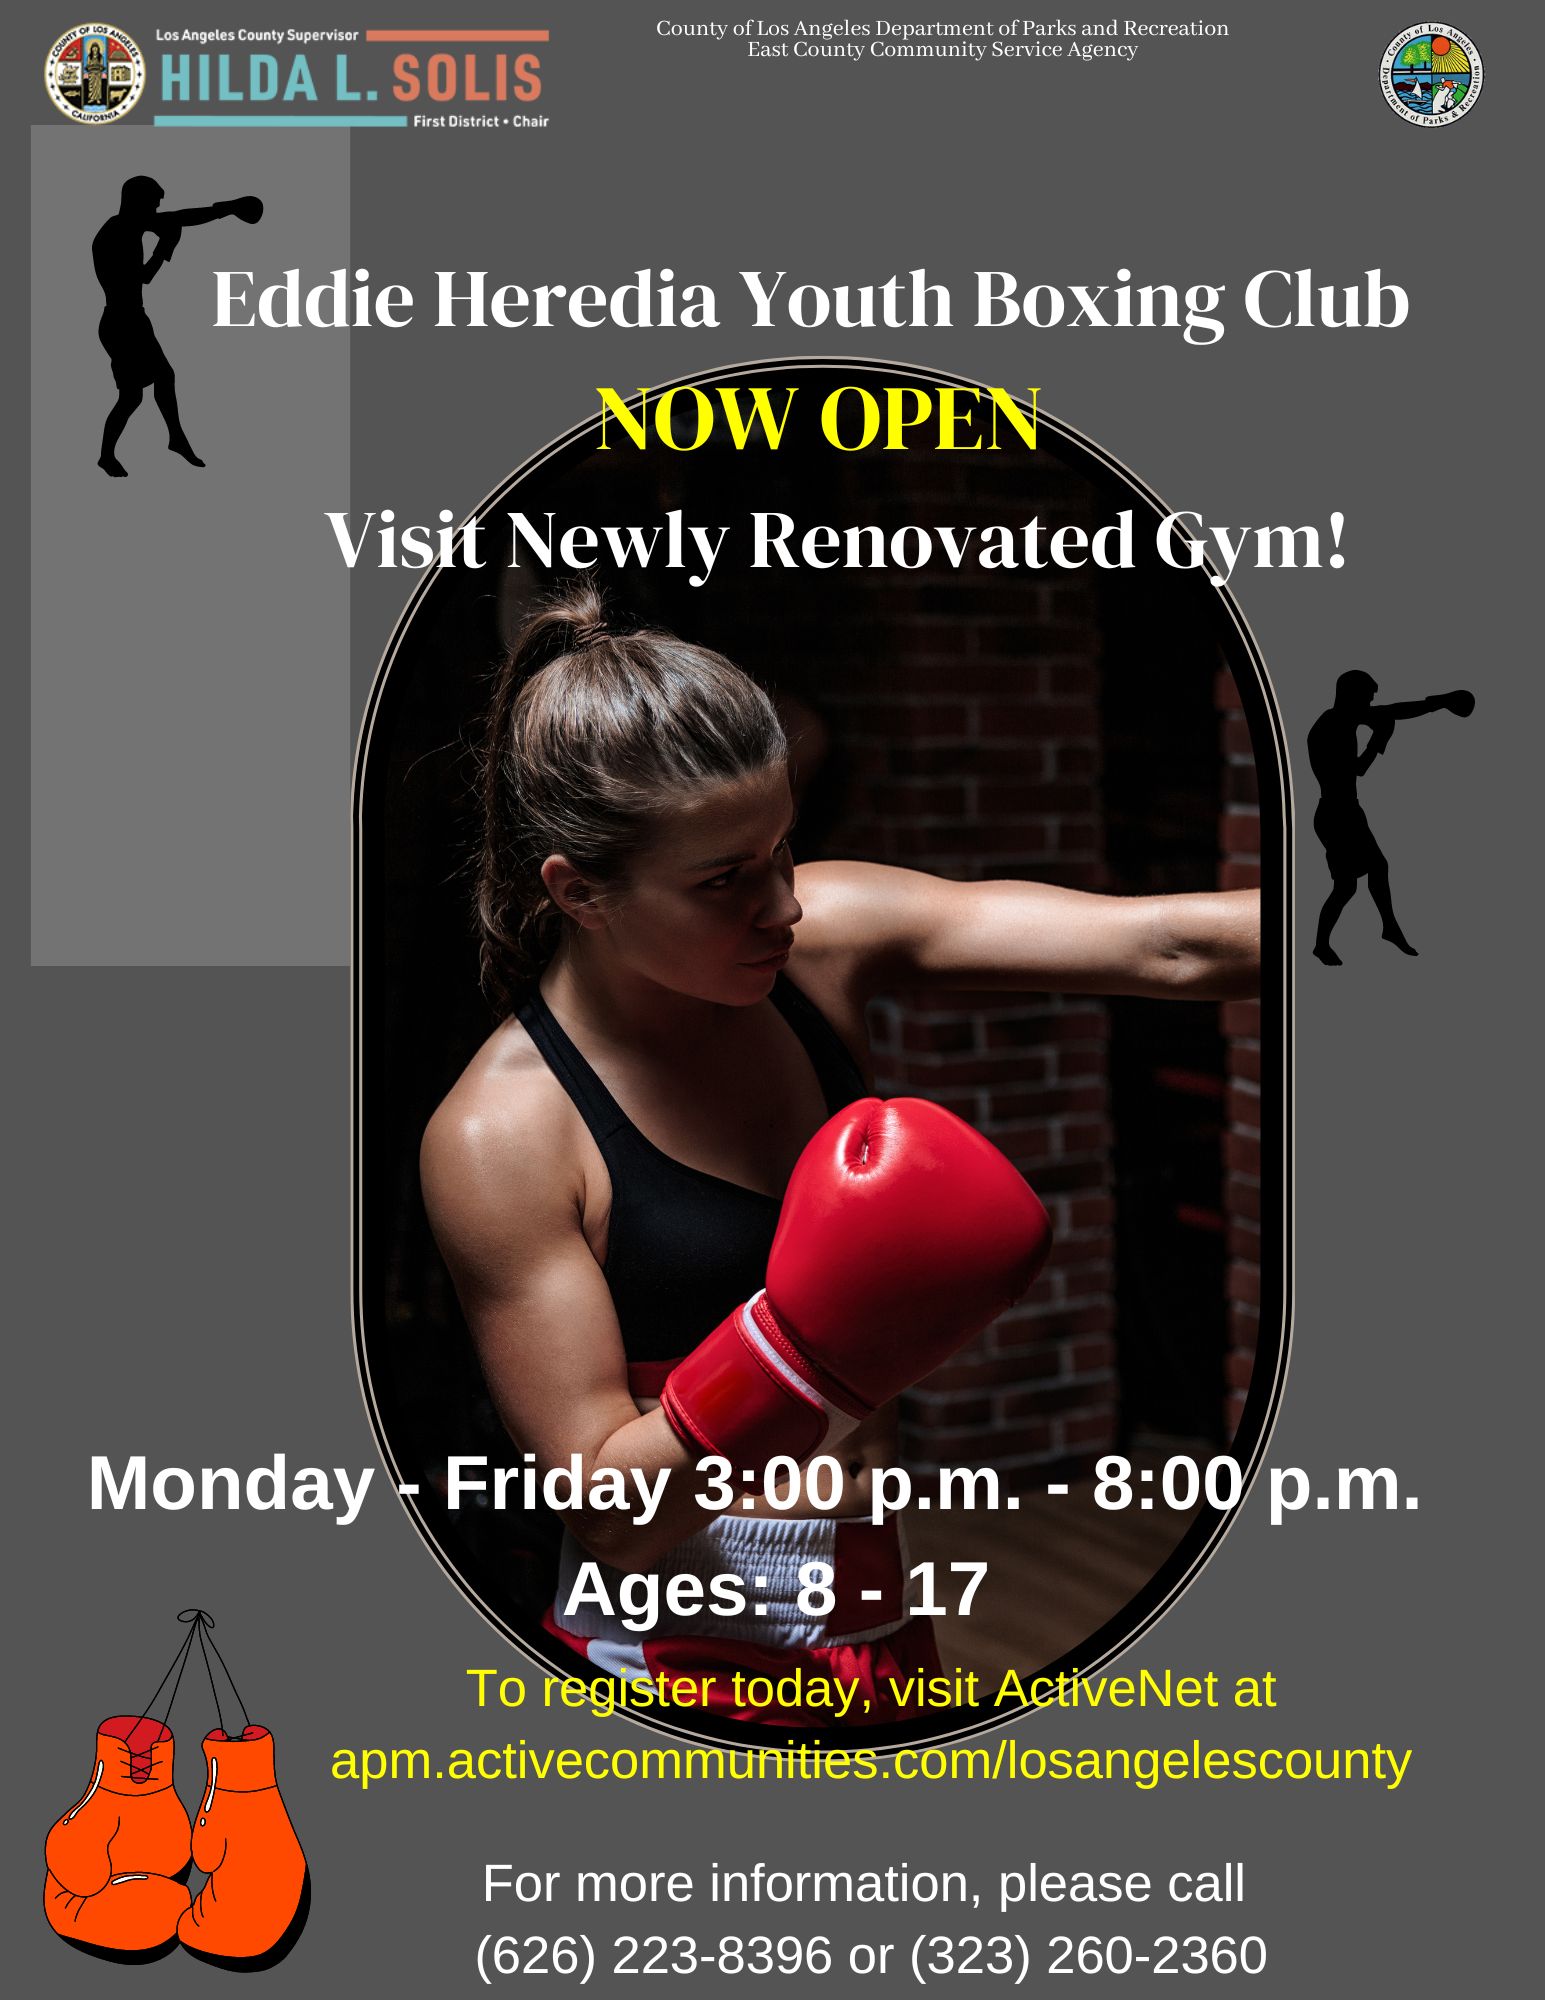 Eastside Eddie Heredia Boxing Club